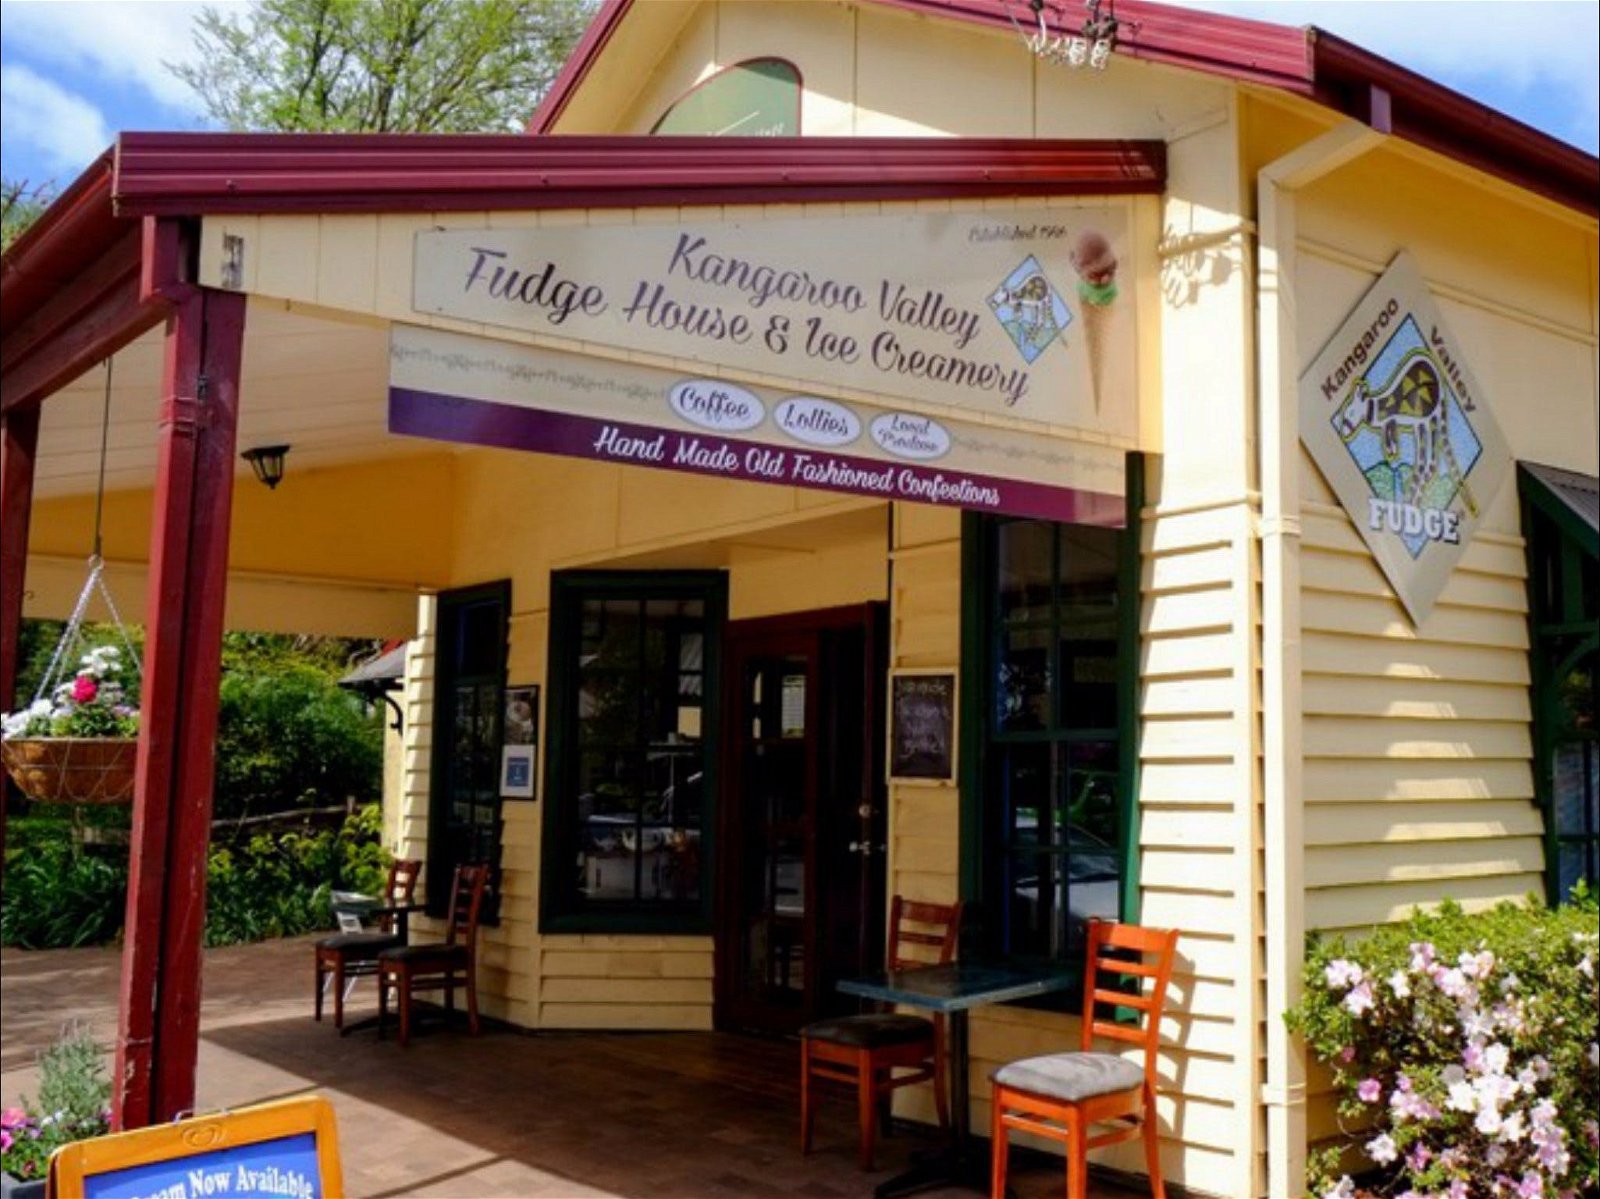 Kangaroo Valley Fudge House and Ice Creamery - Pubs Sydney